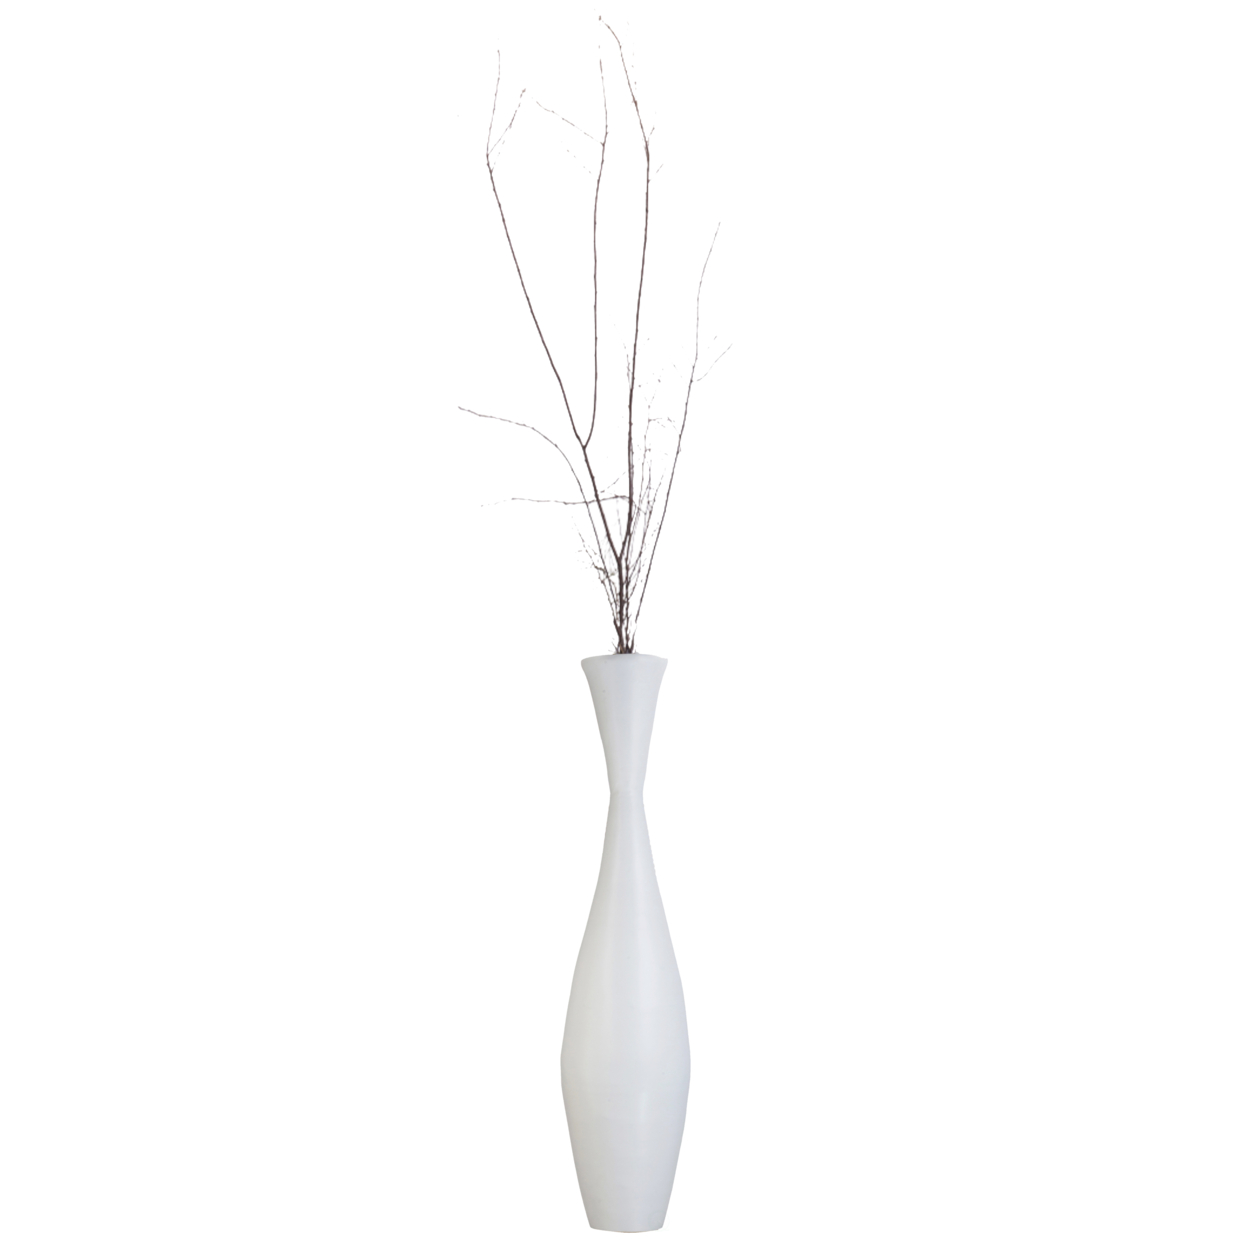 Decorative Contemporary Bamboo Floor Flower Vase, 43 Inch - White